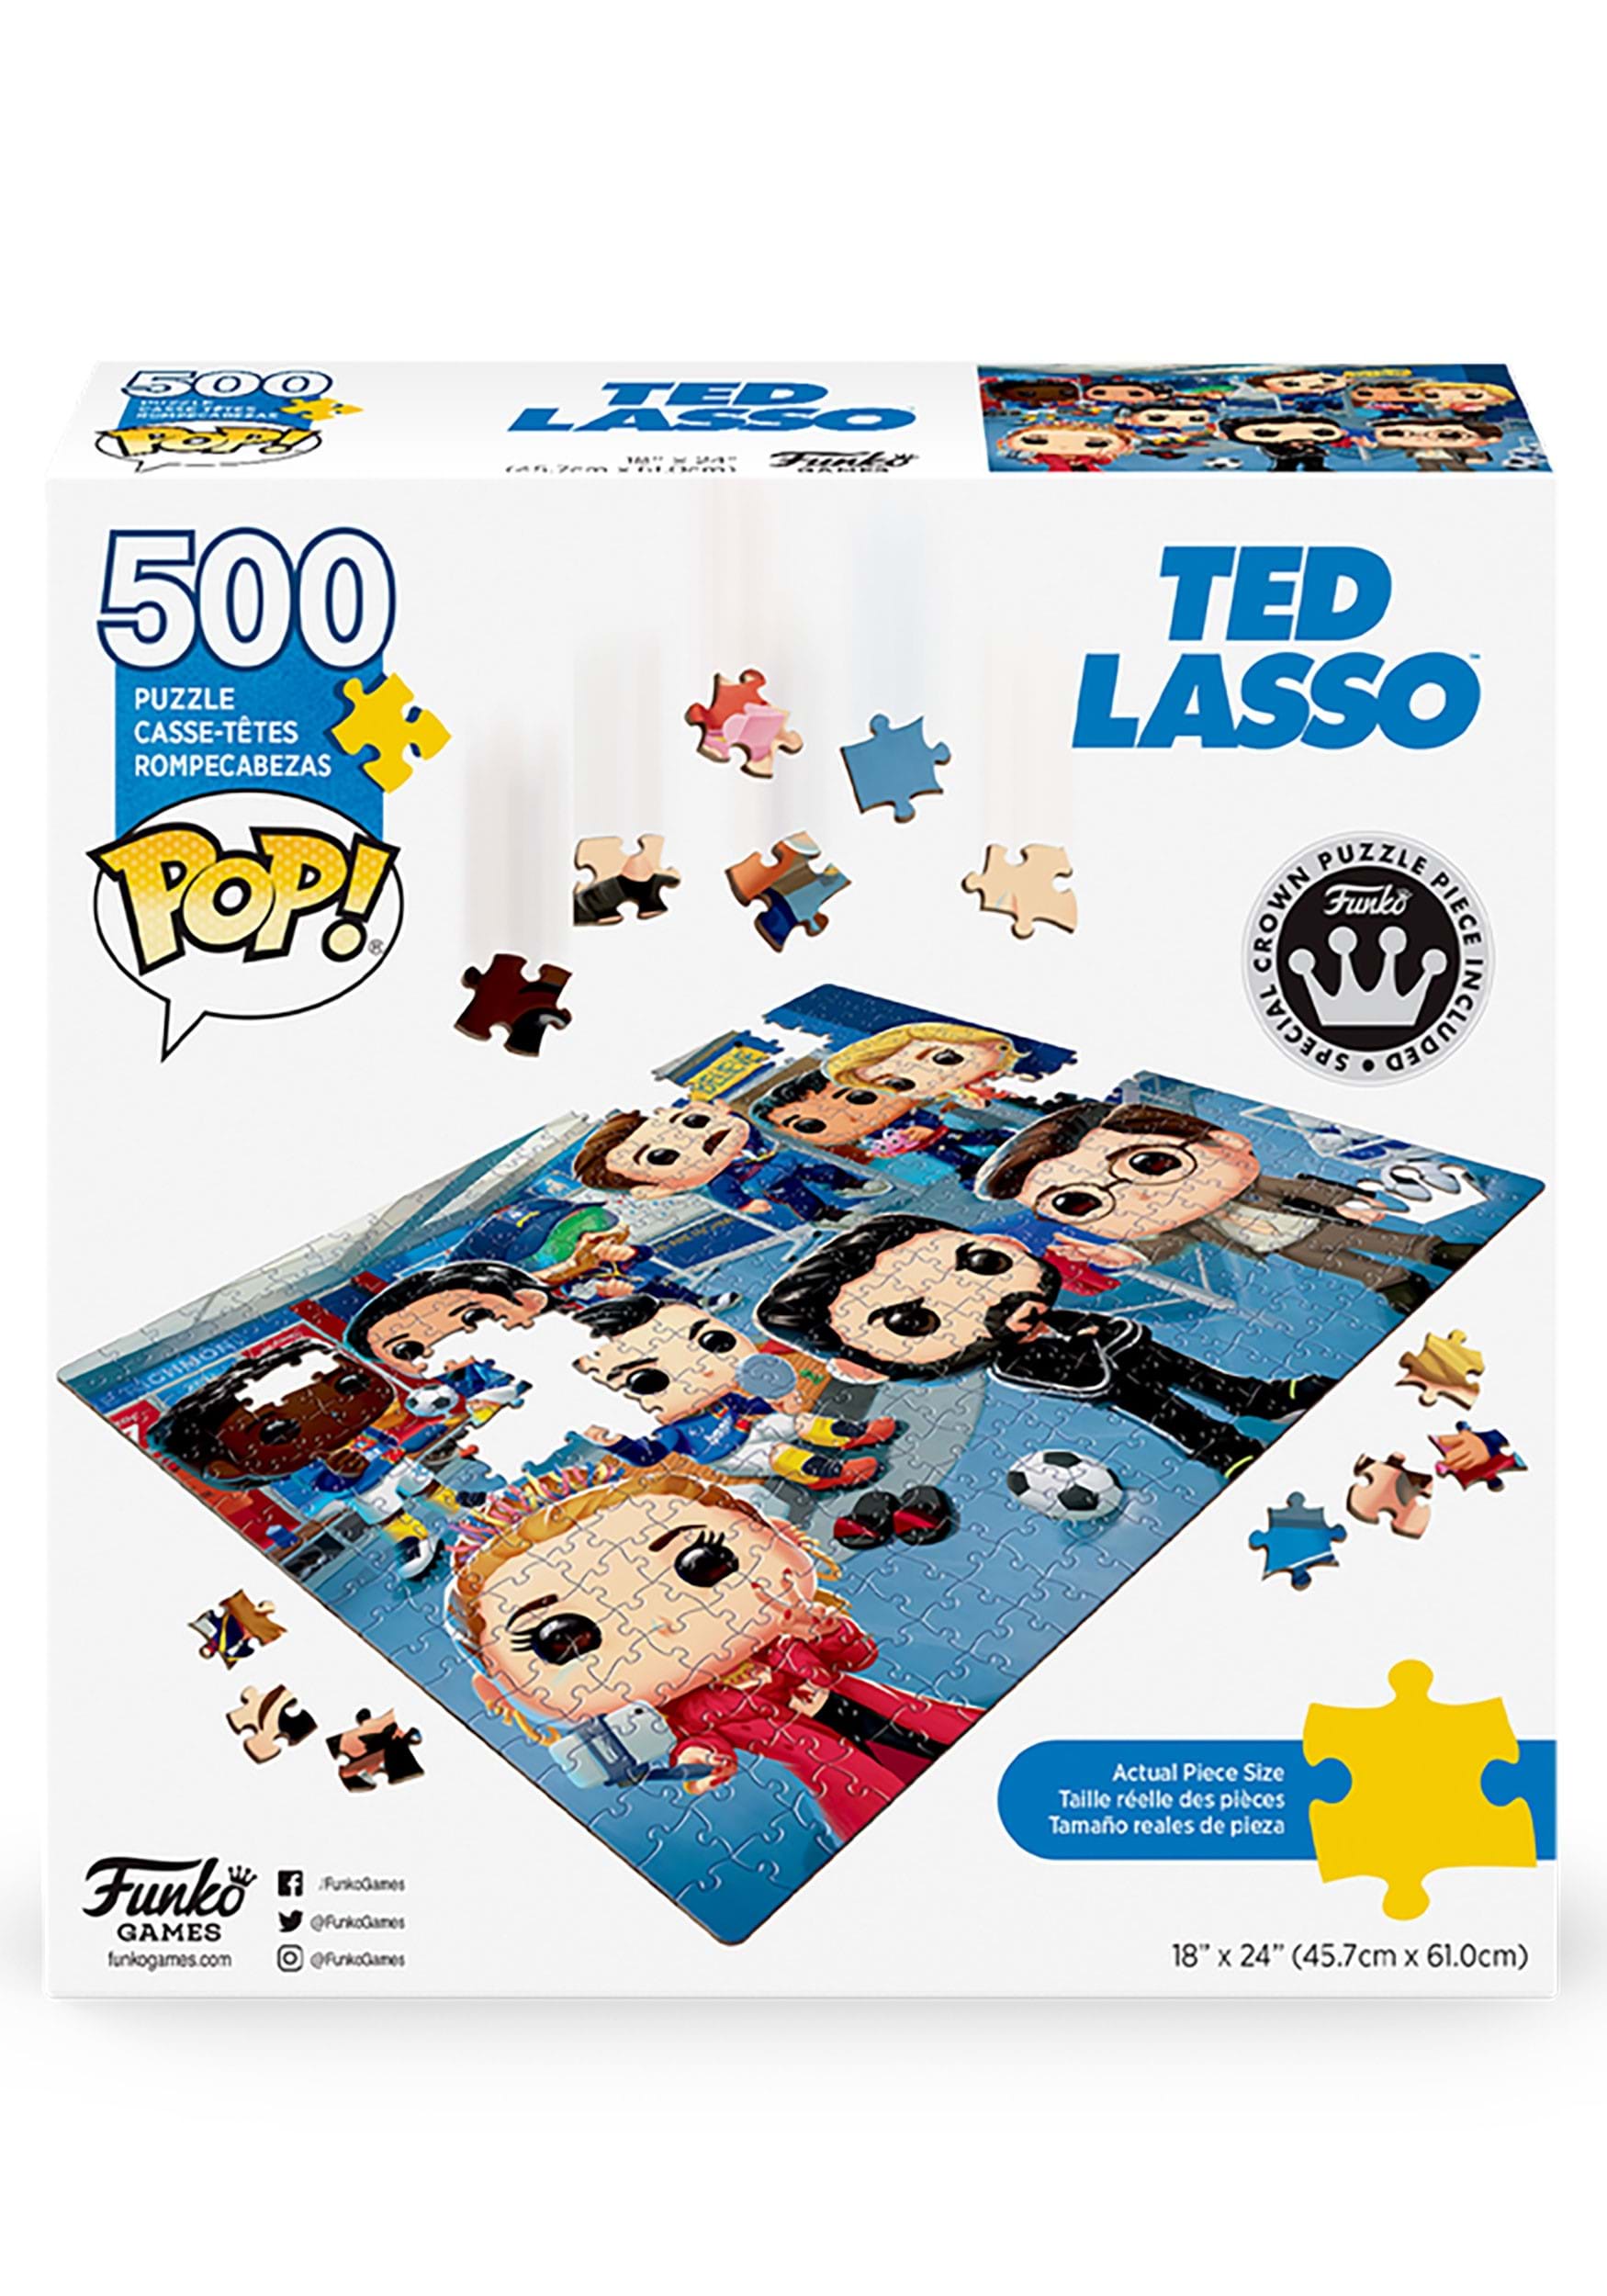 Funko POP! Ted Lasso 500 Piece Puzzle